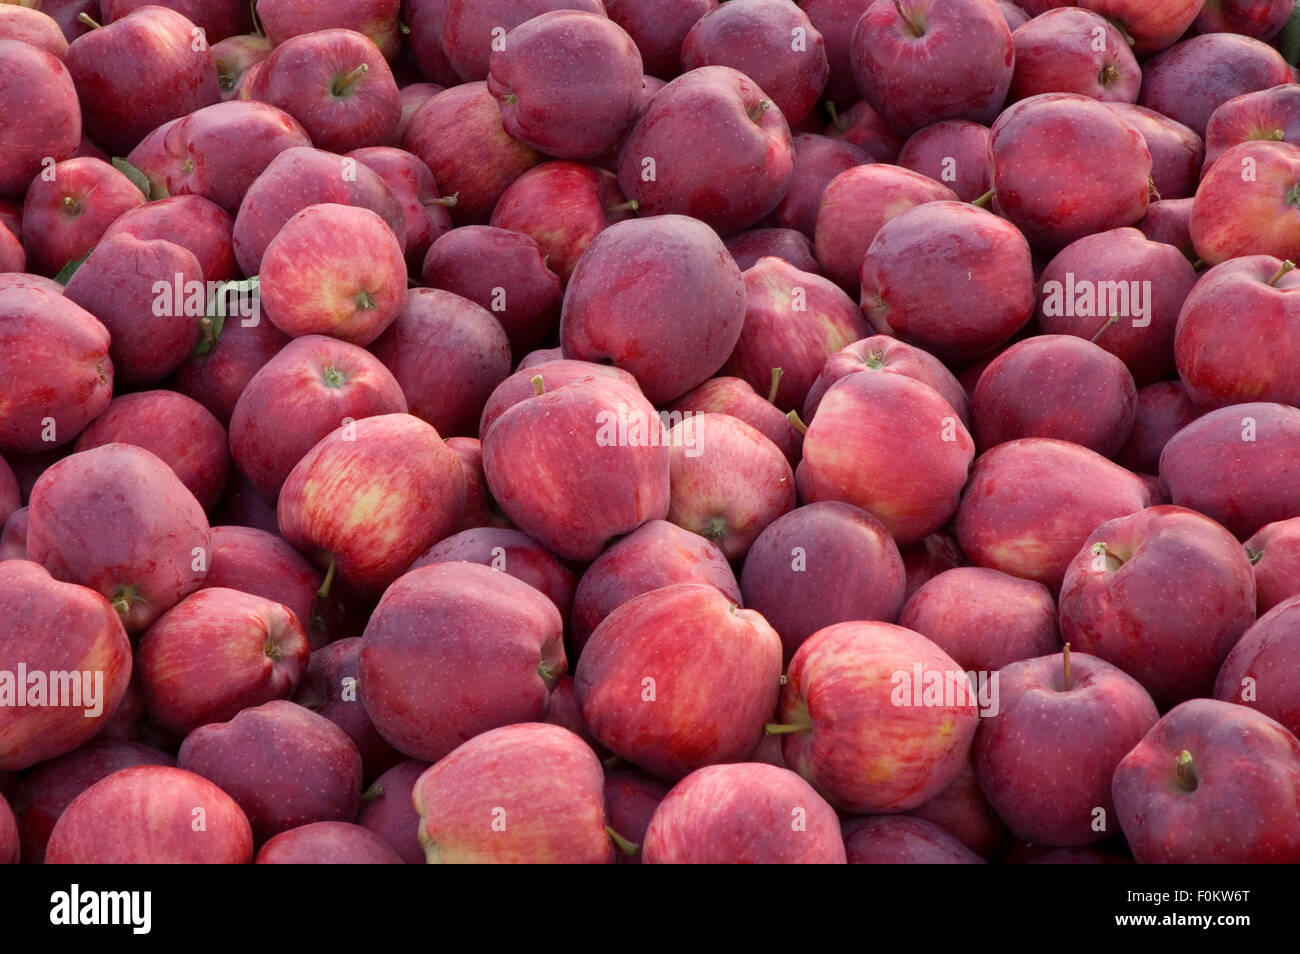 Chelan Fresh, Washington State Apples